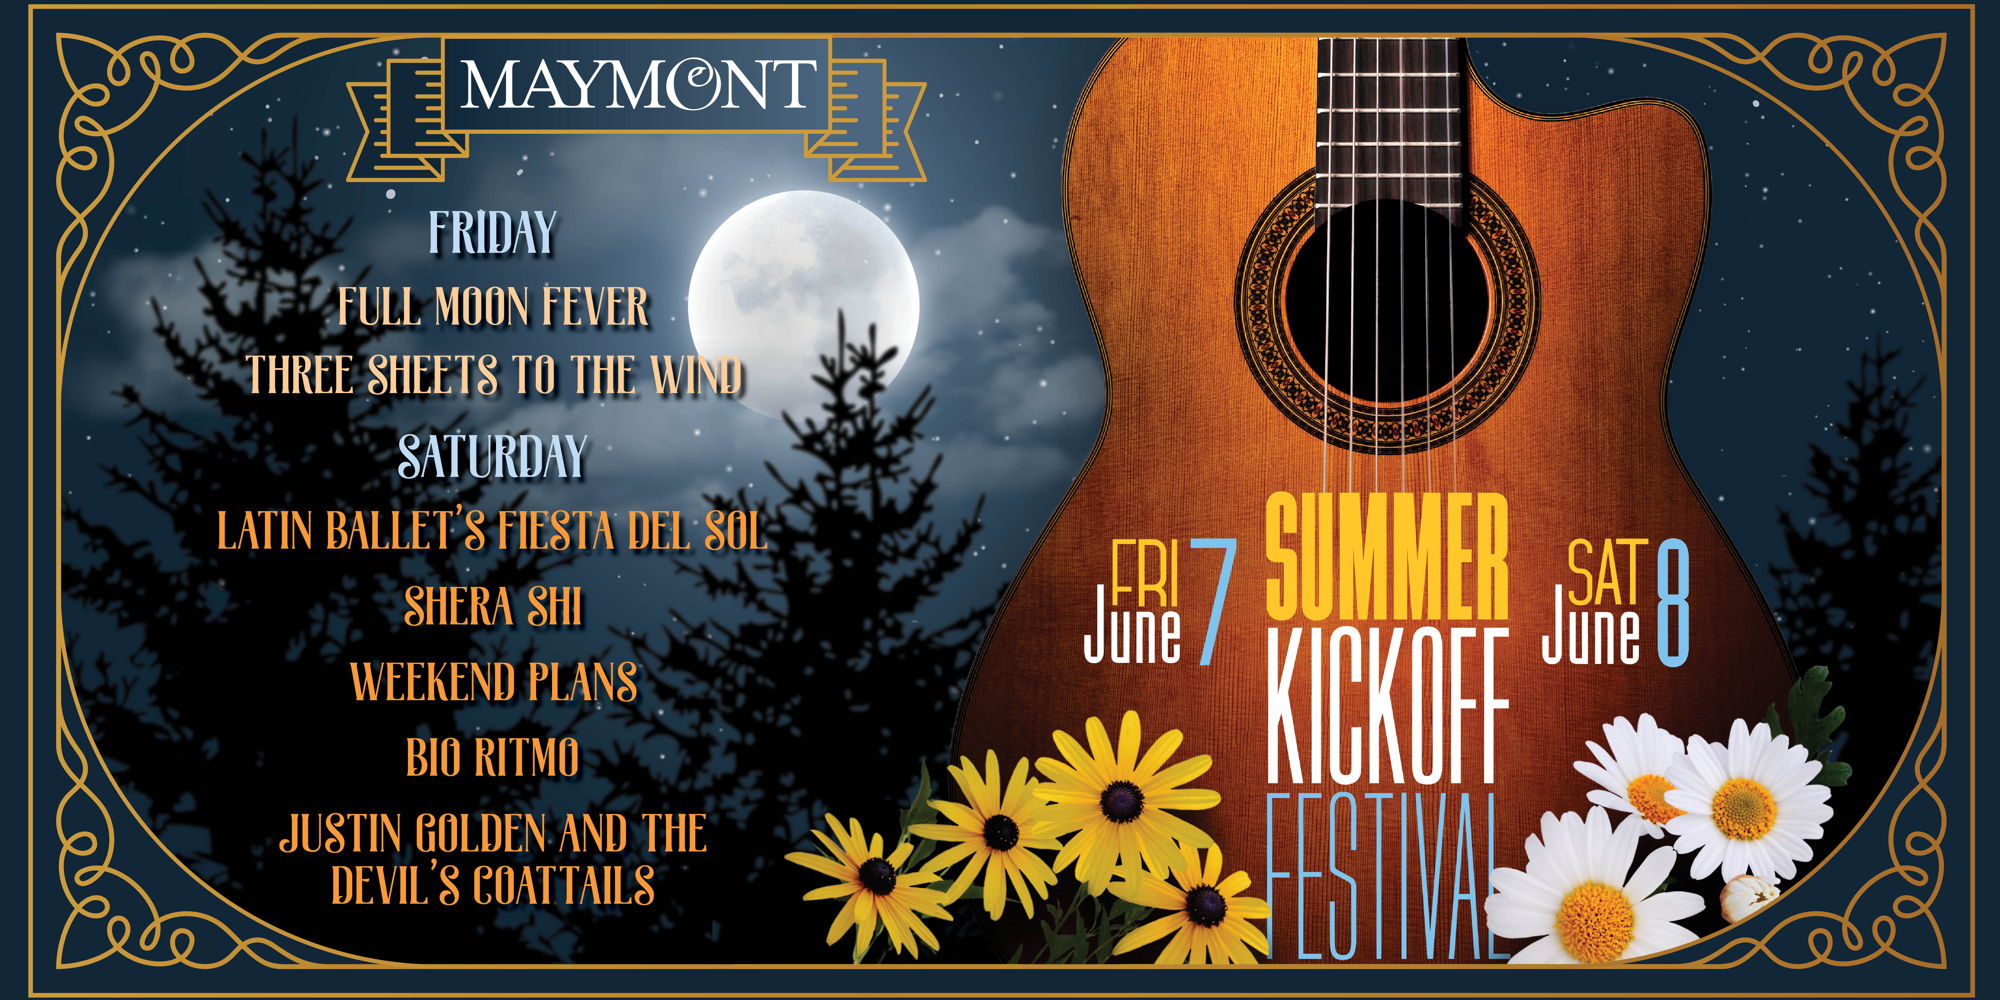 Summer Kickoff Festival promotional image